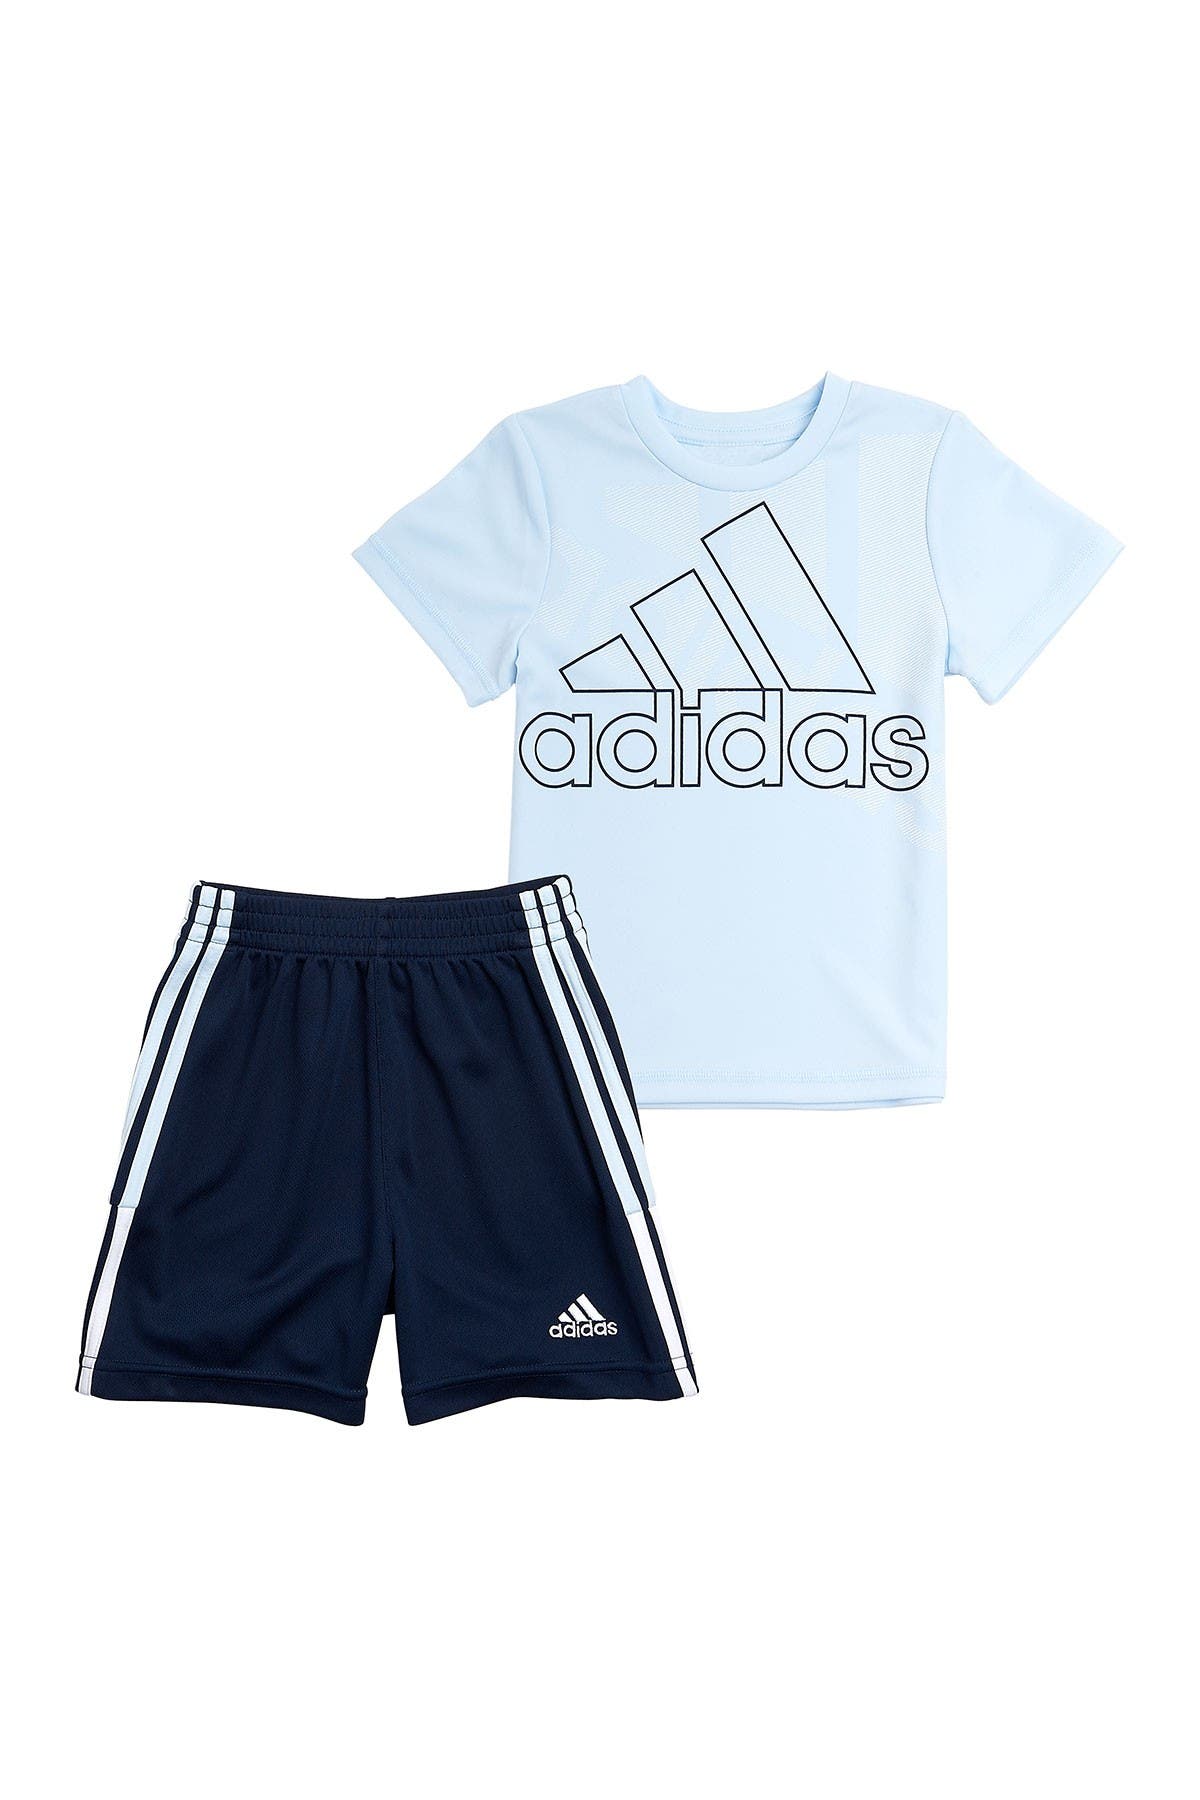 adidas shorts set baby